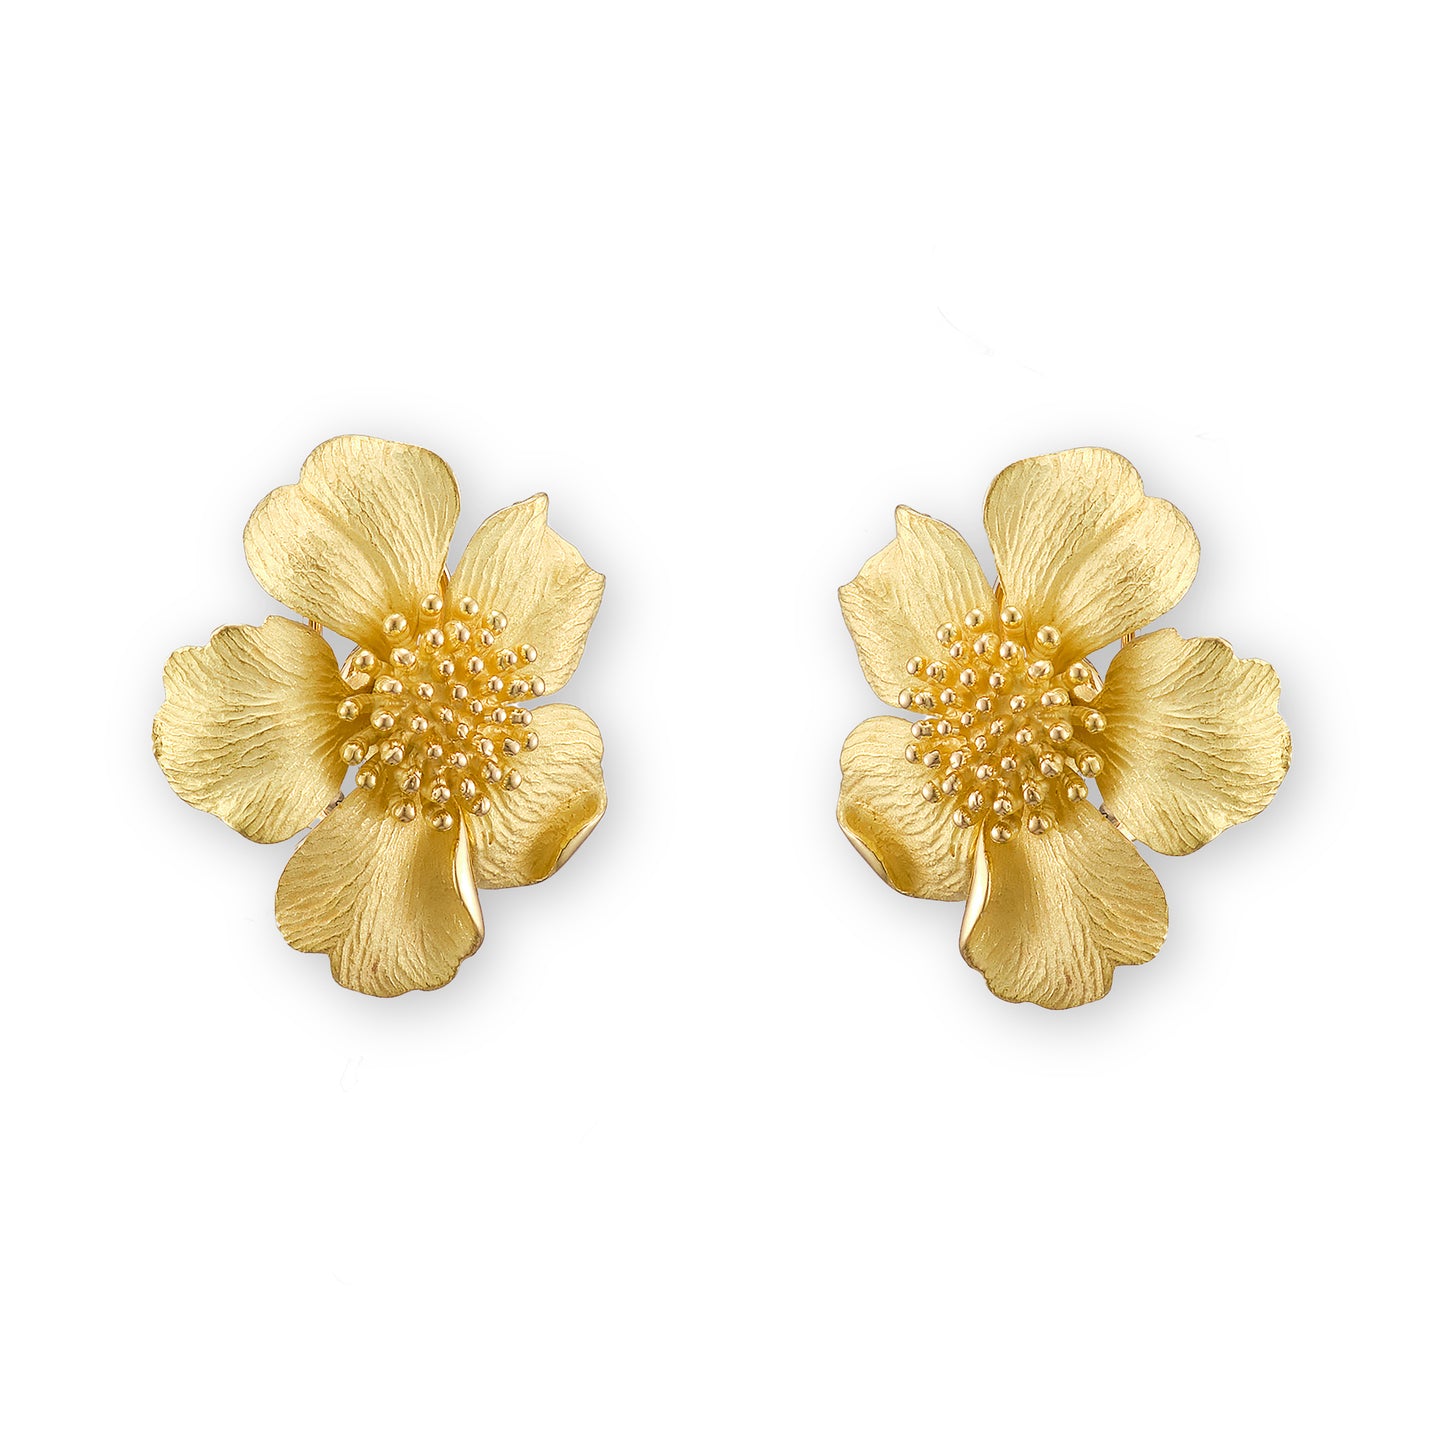 Tiffany & Co. 'Dogwood' Earrings